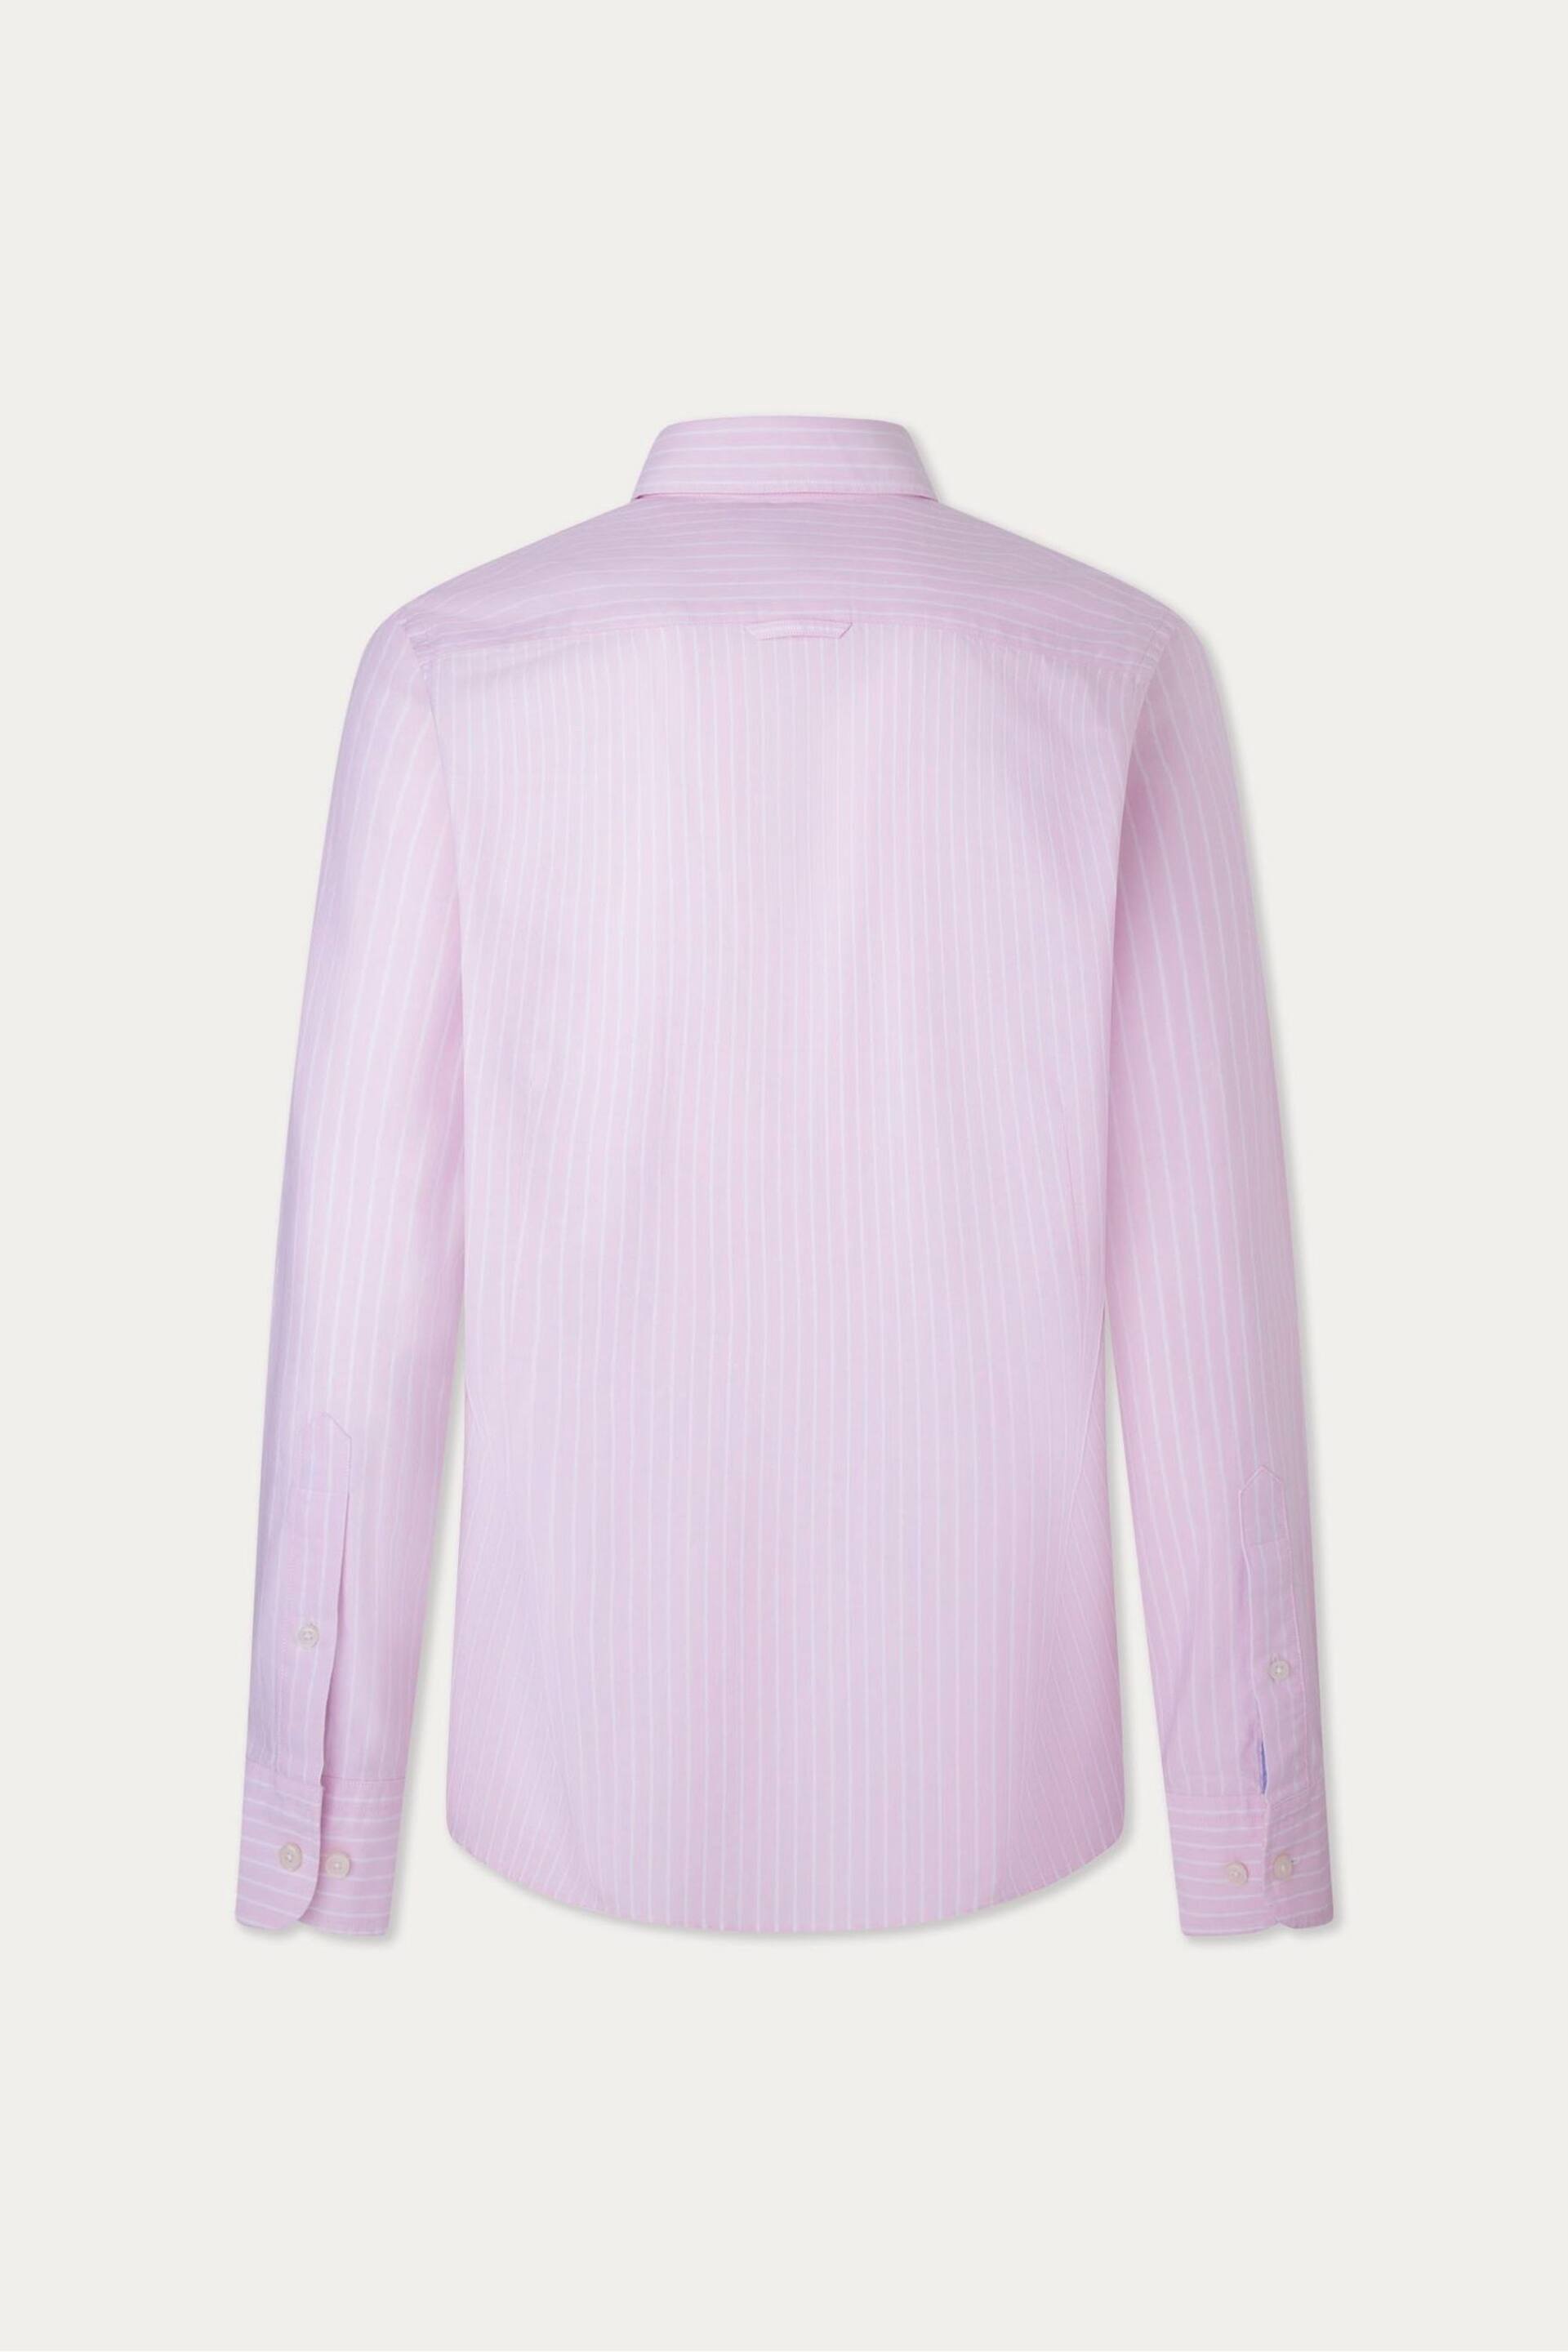 Hackett London Men Pink Long Sleeve Shirt - Image 2 of 3